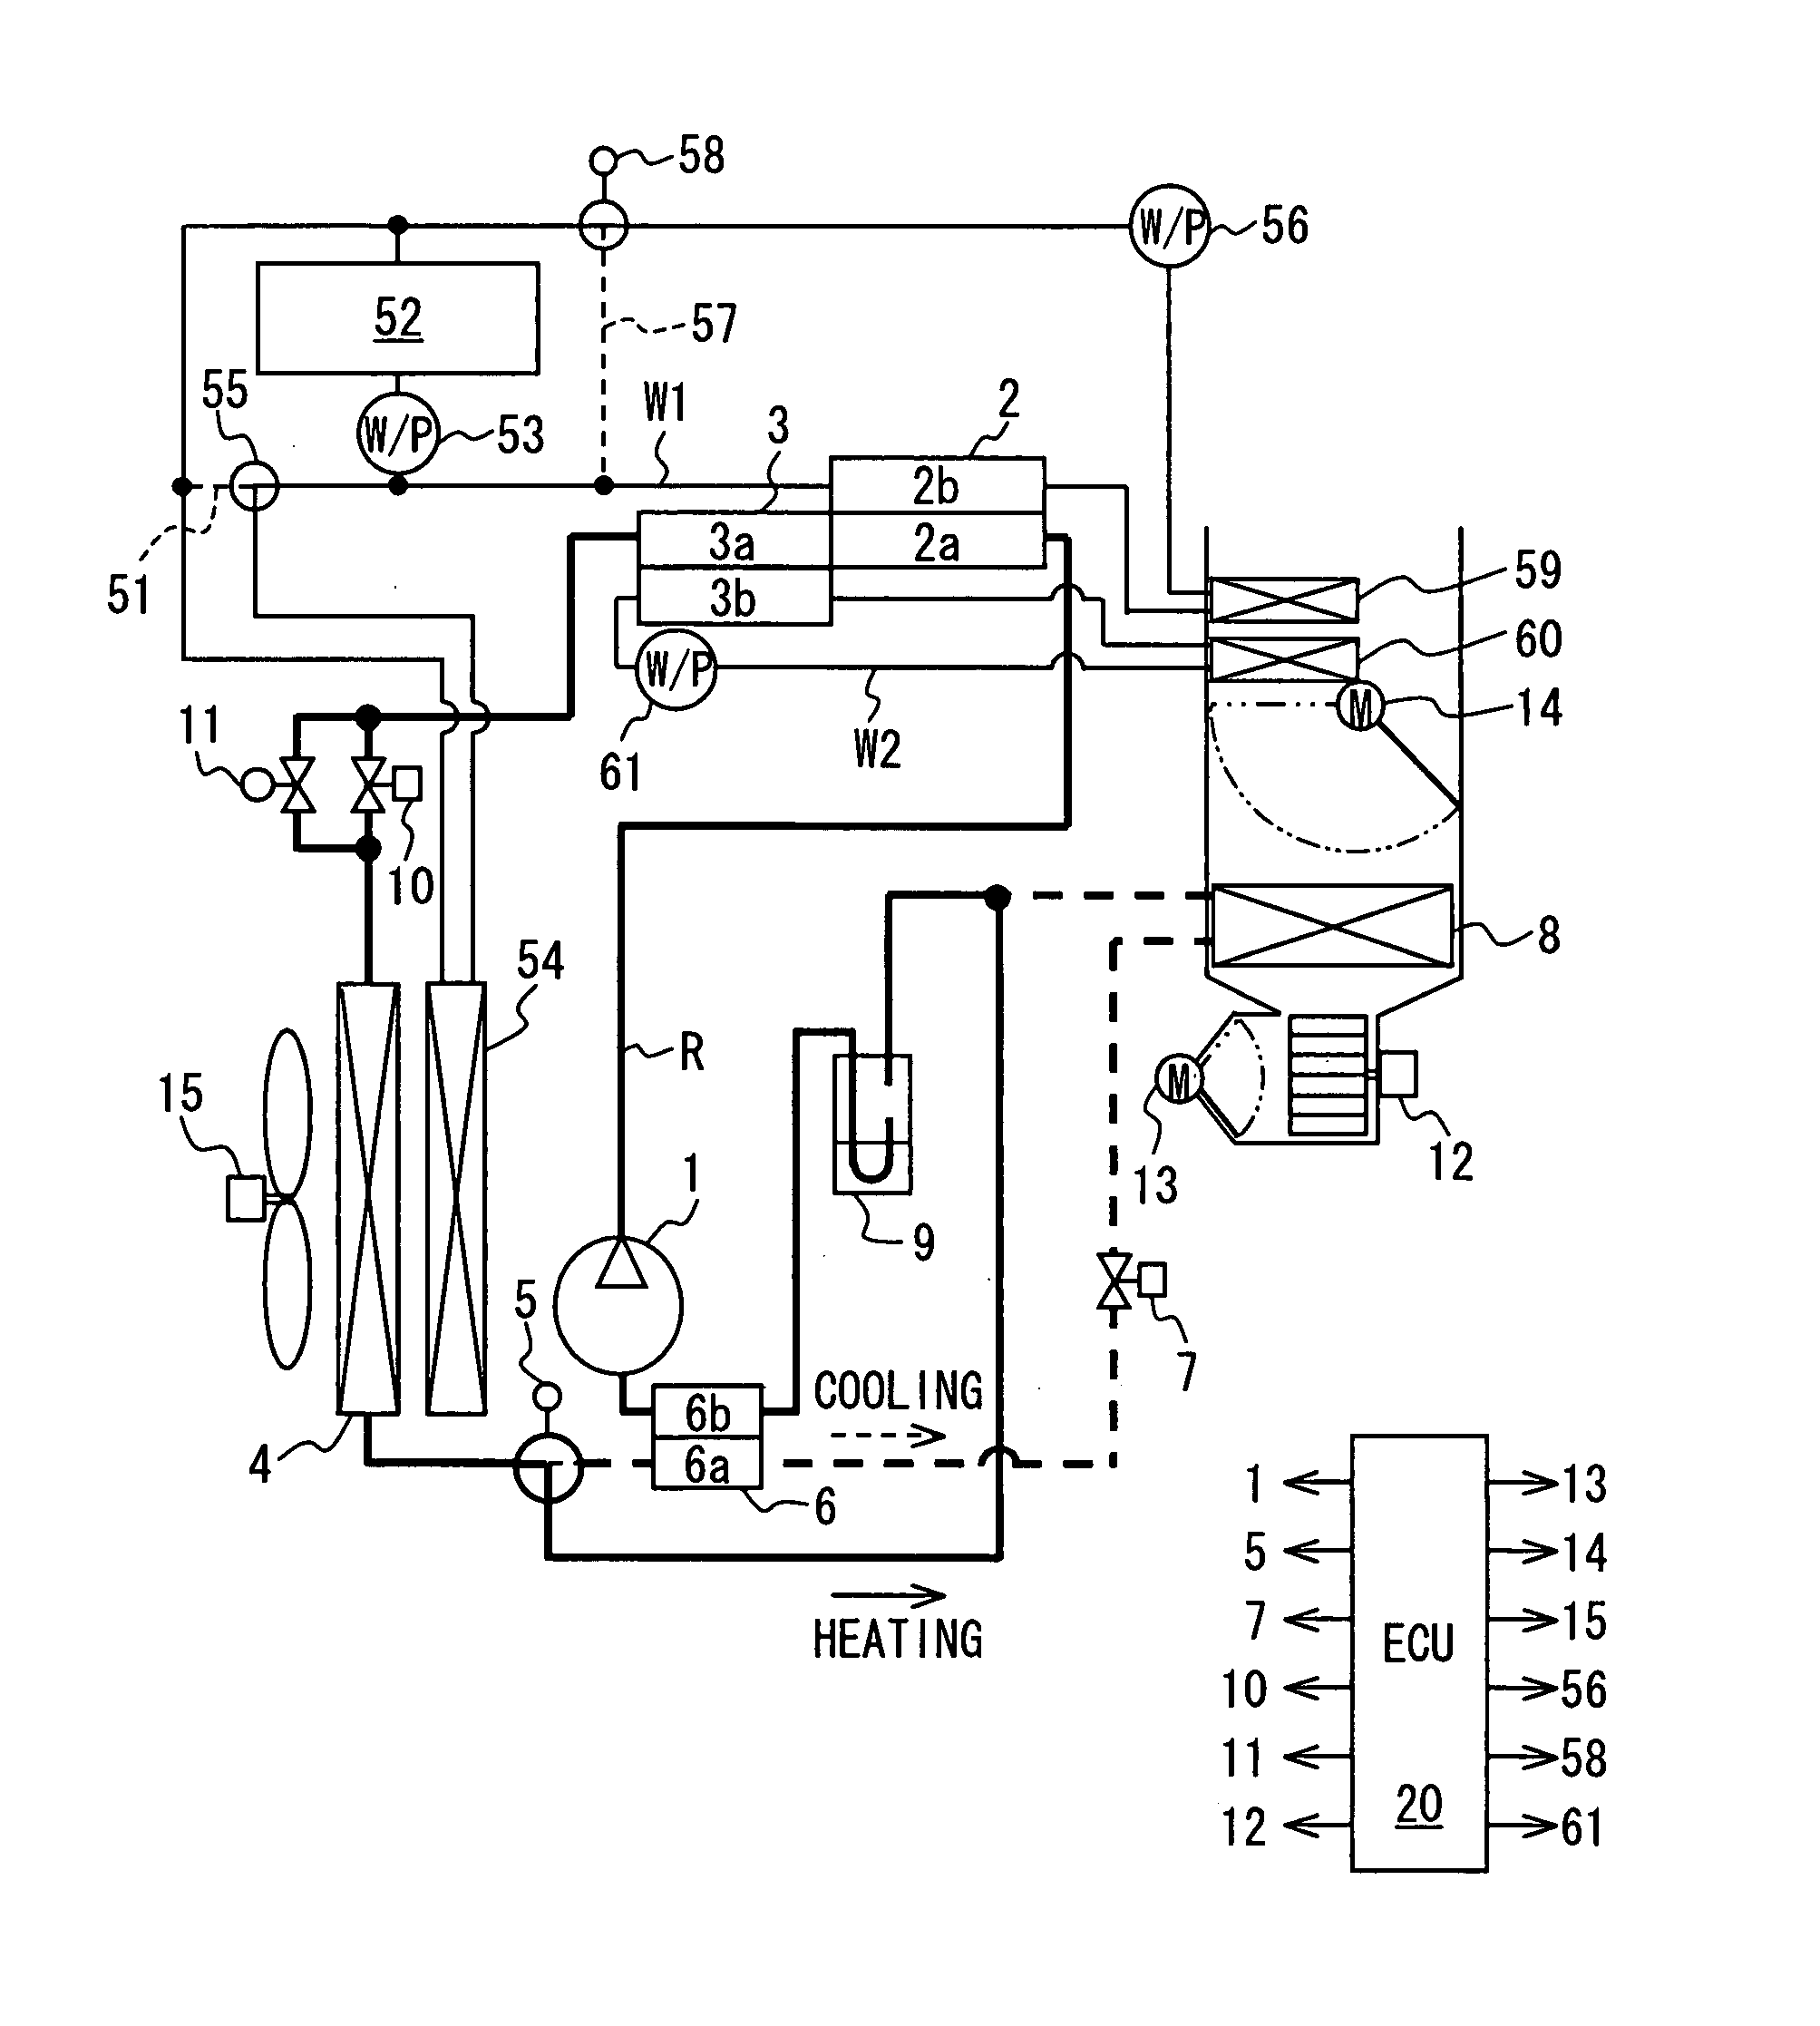 Heat pump cycle device